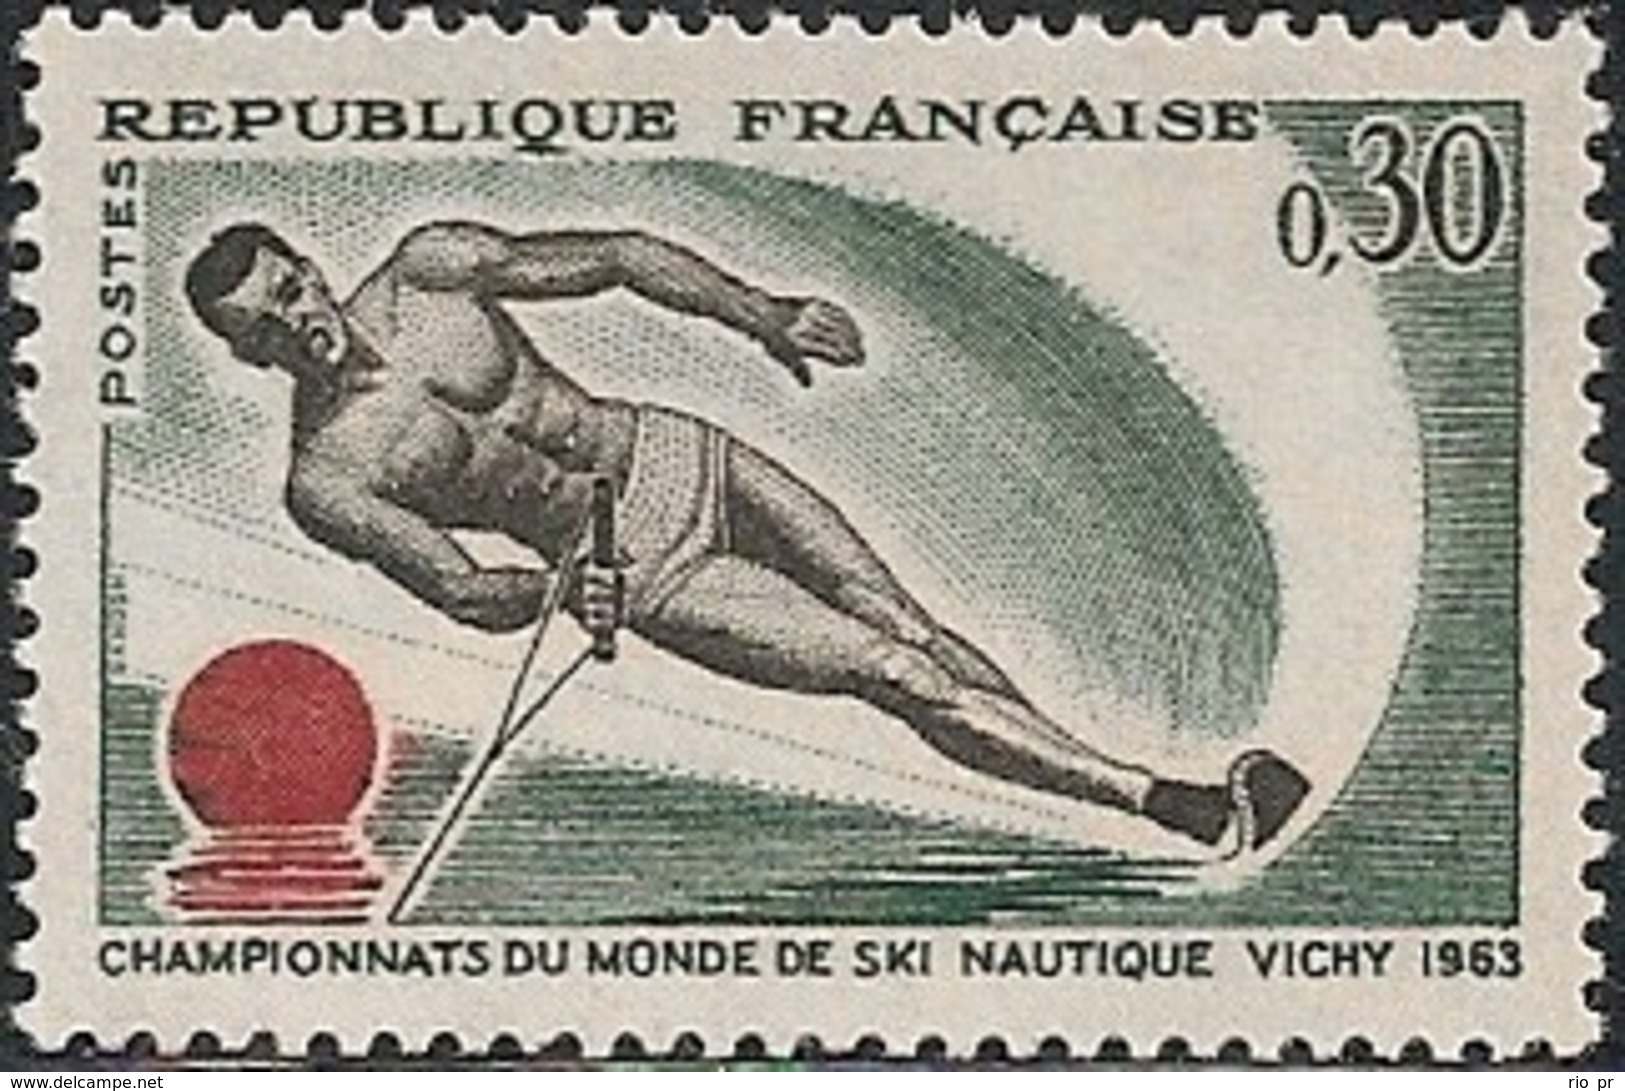 FRANCE - WORLD WATER-SKIING CHAMPIONSHIPS, VICHY 1963 - MNH - Ski Náutico